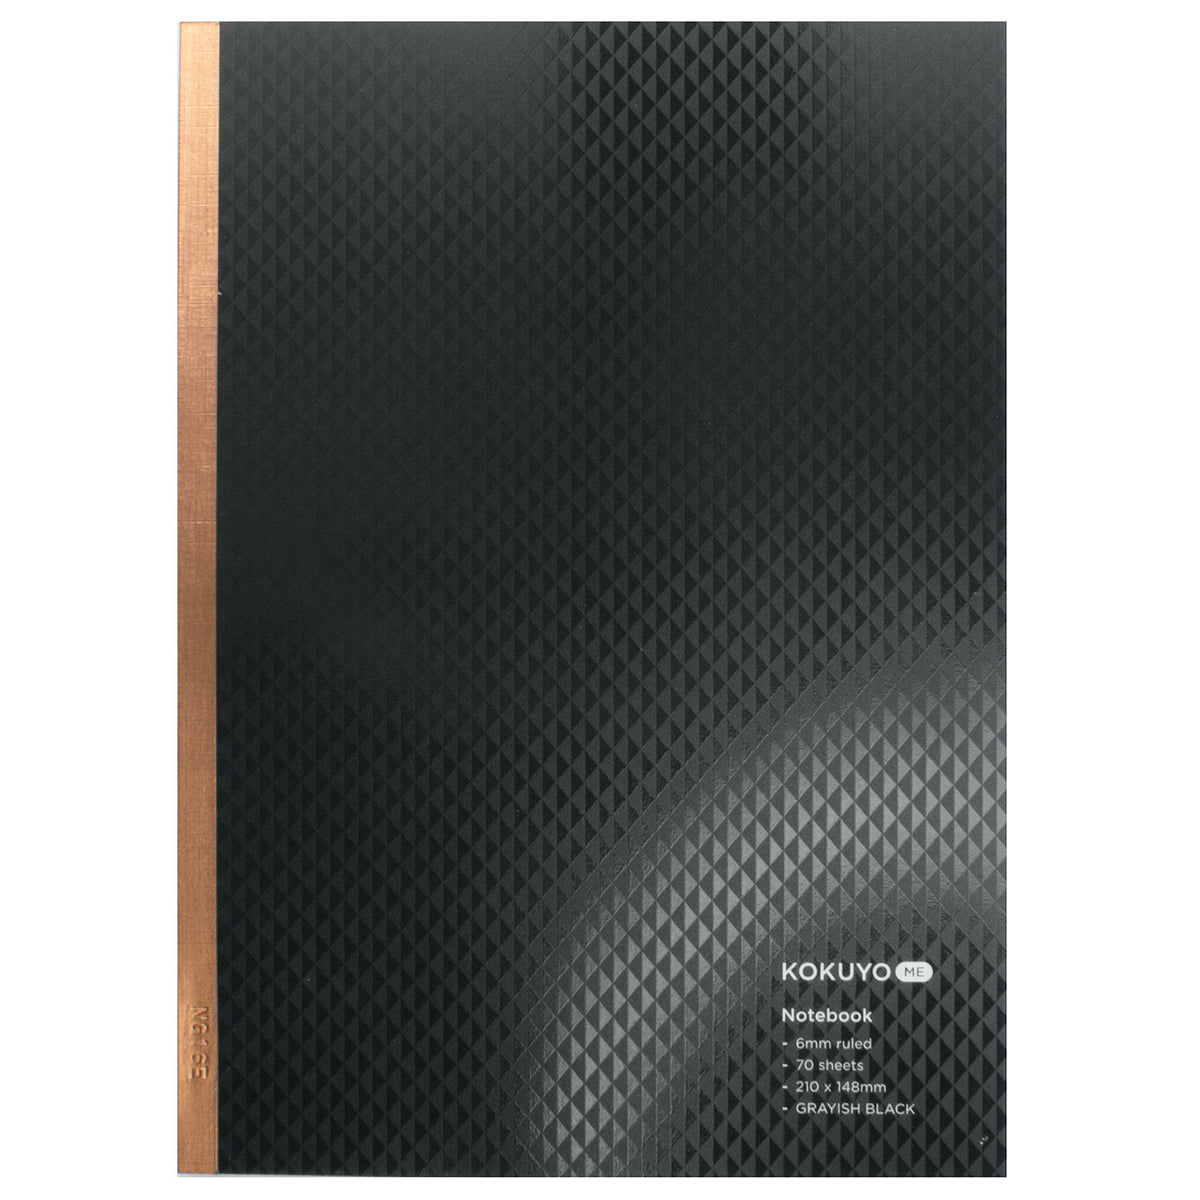 Kokuyo Campus A5 Notebook- "Greyish Black & Gold", Lined